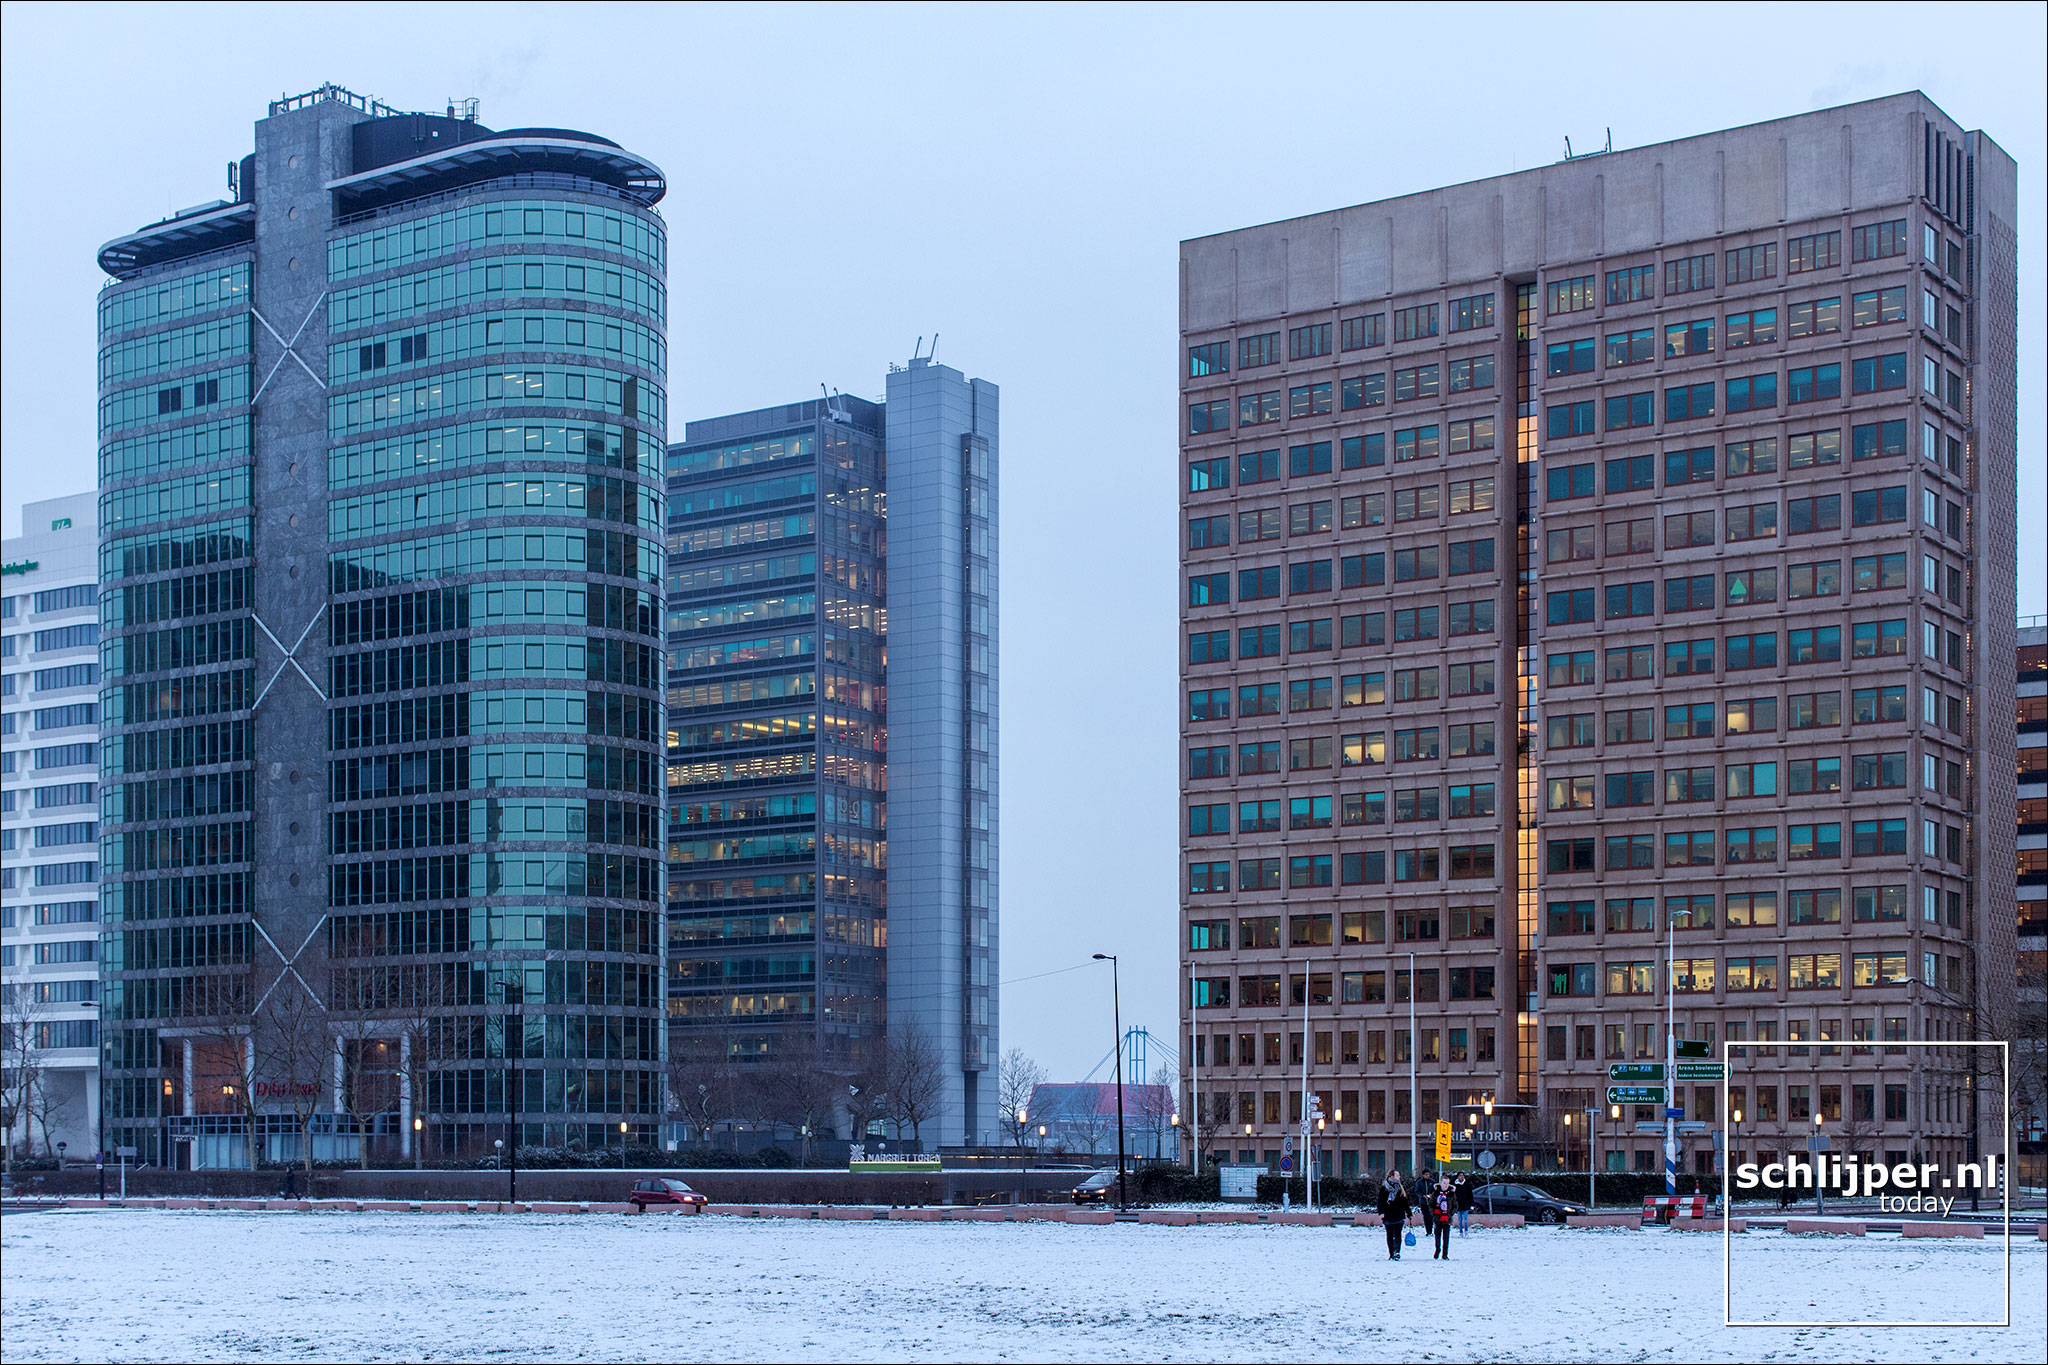 The Netherlands, Amsterdam, 24 januari 2019